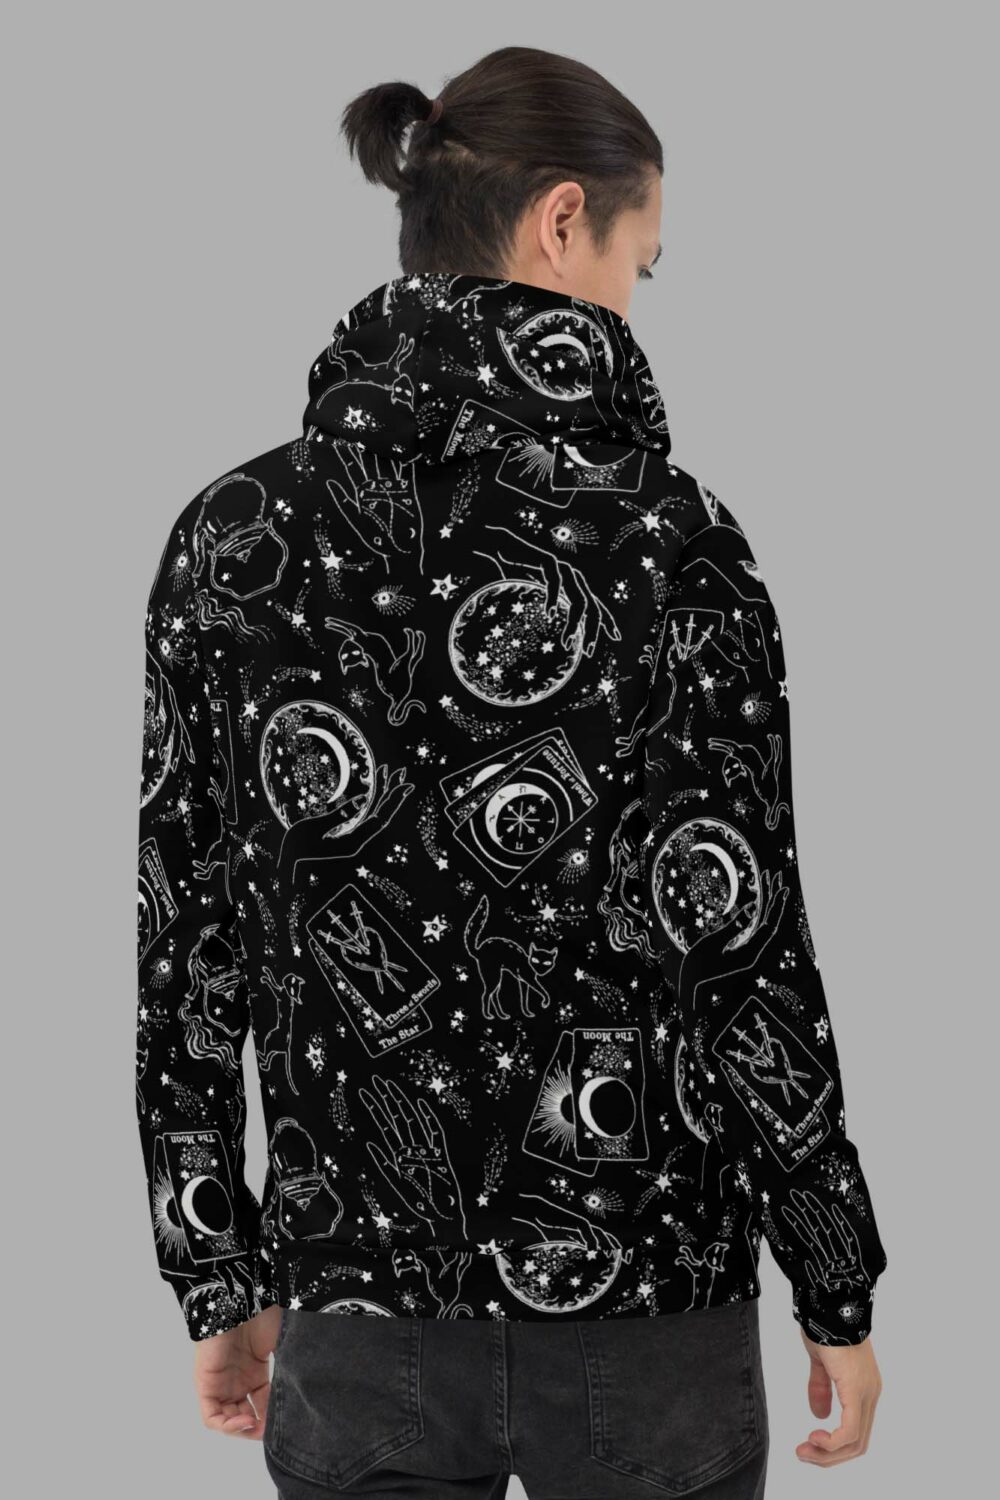 cosmic drifters hoodie back travelling carnival print